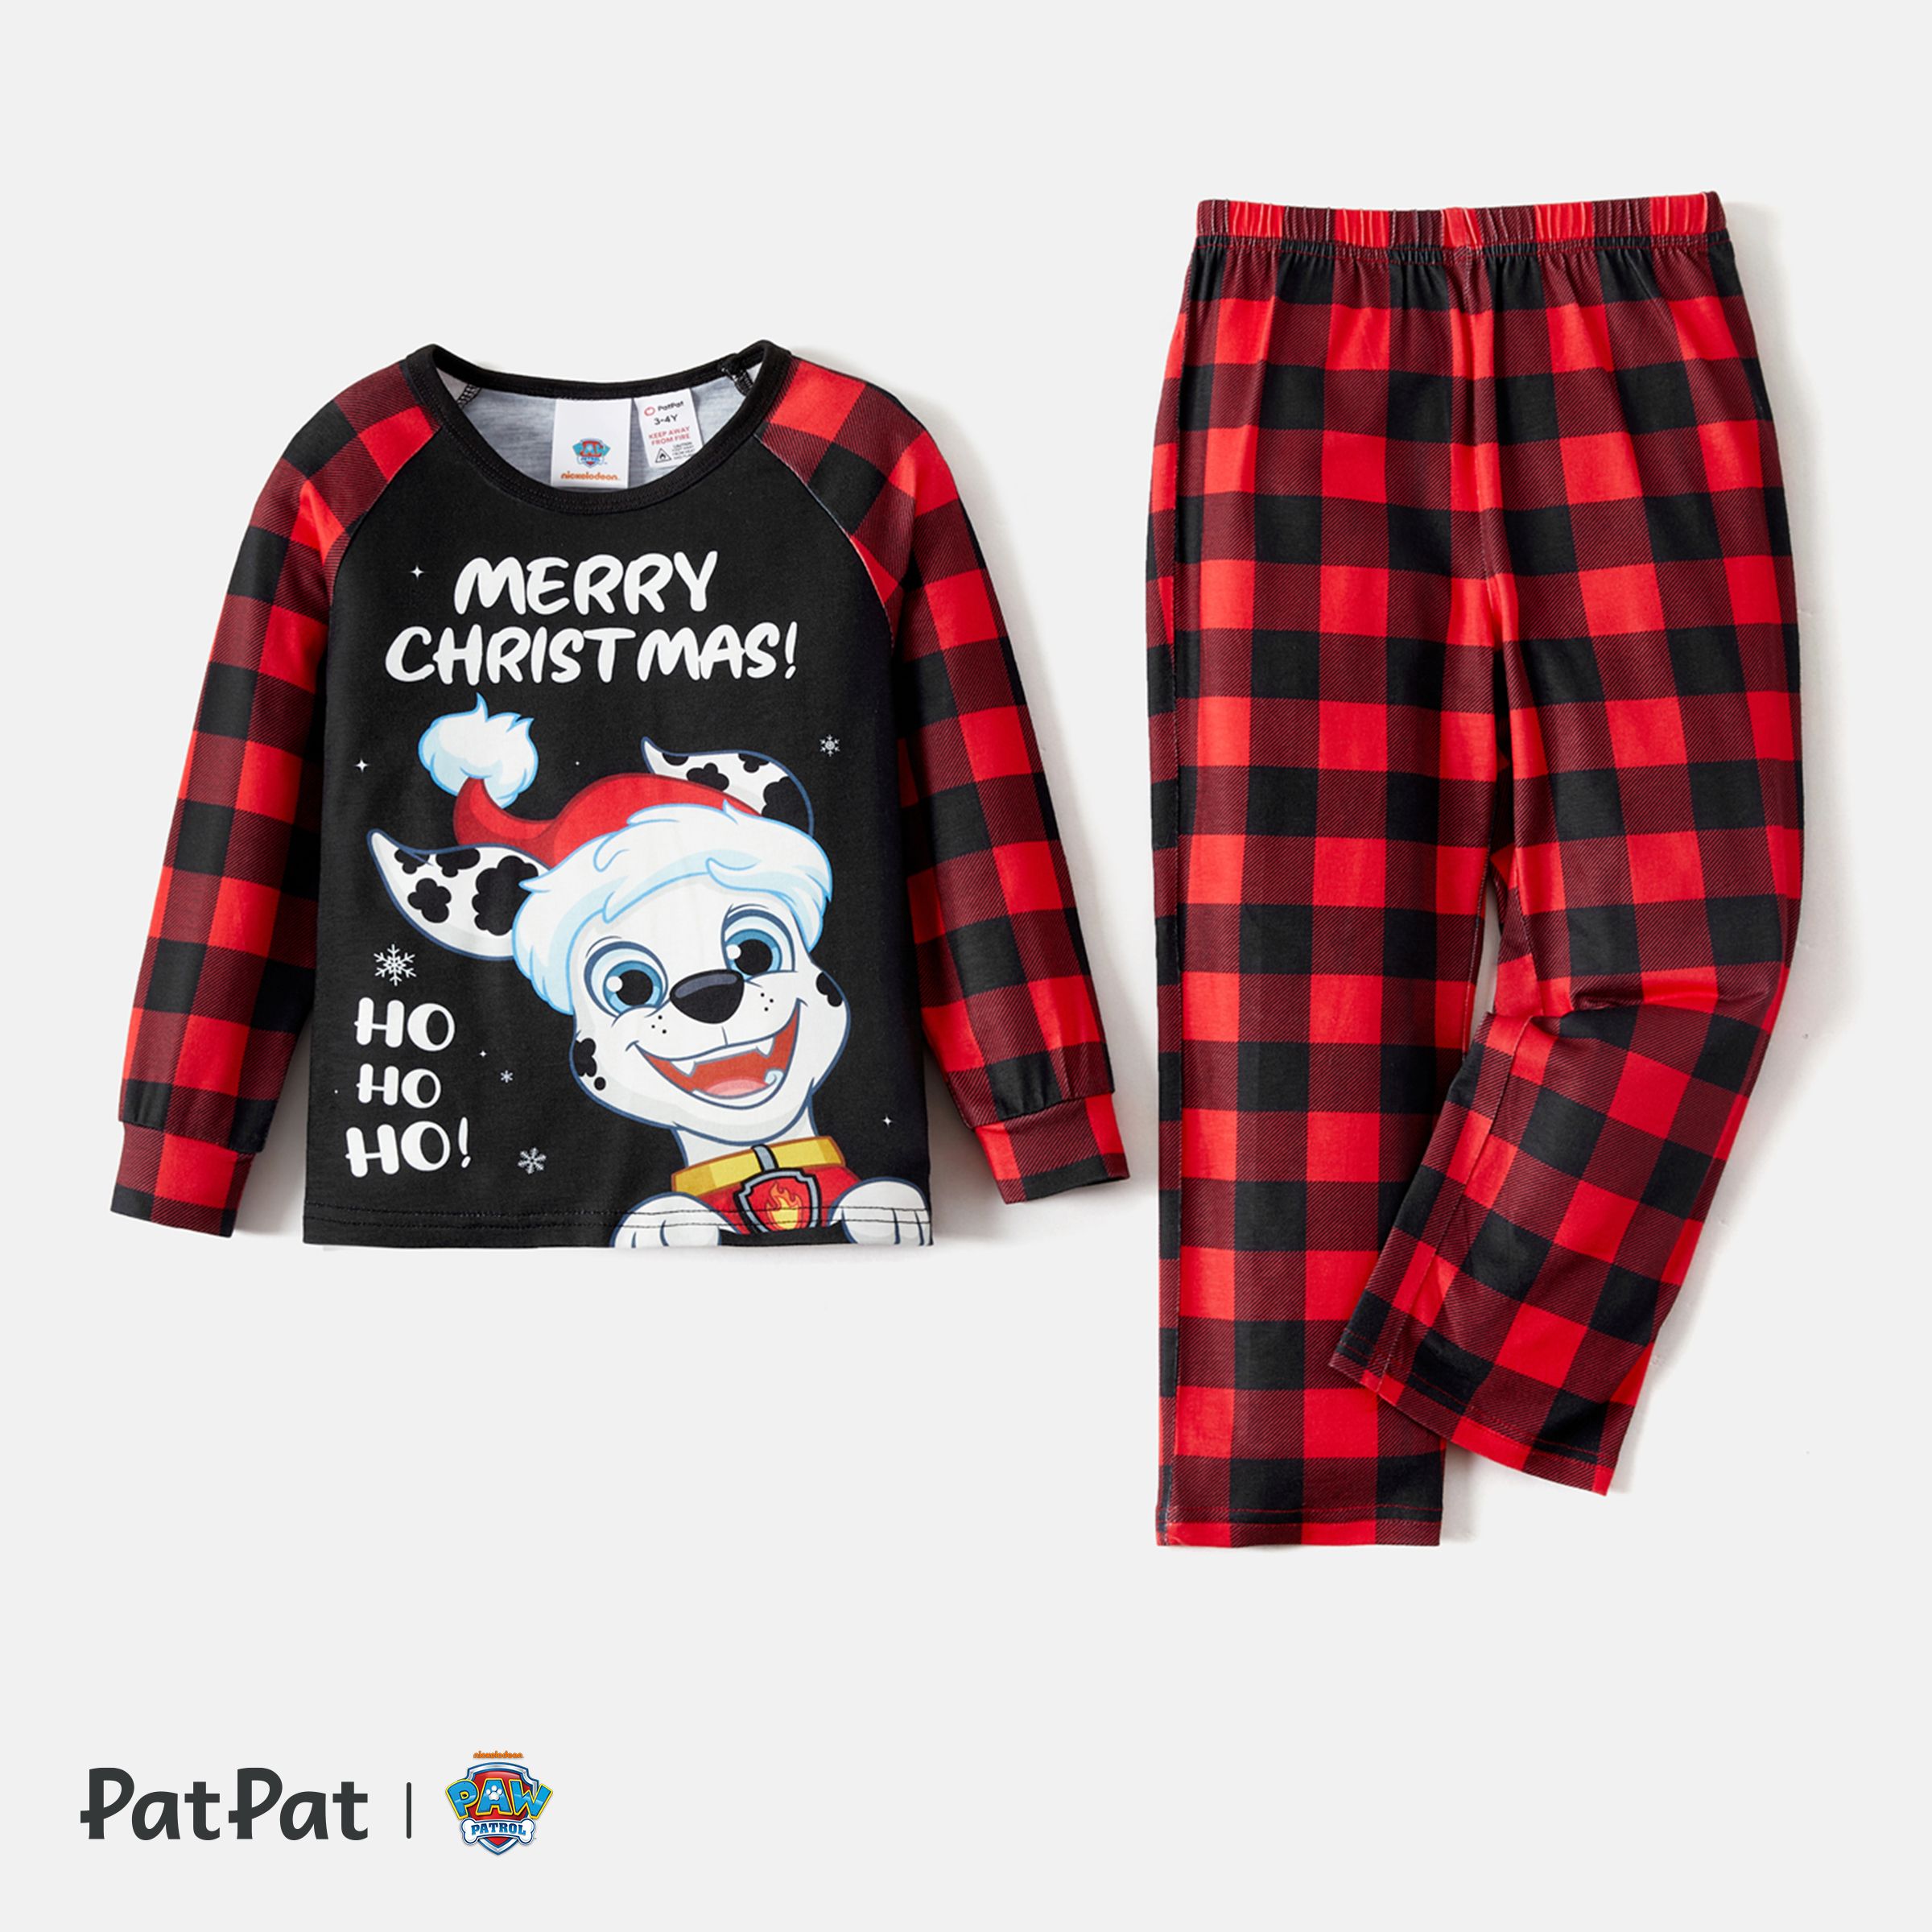 PAW Patrol Family Matching Christmas Red Plaid Long-sleeve Cartoon Graphic Pajamas Sets (Flame Resistant)